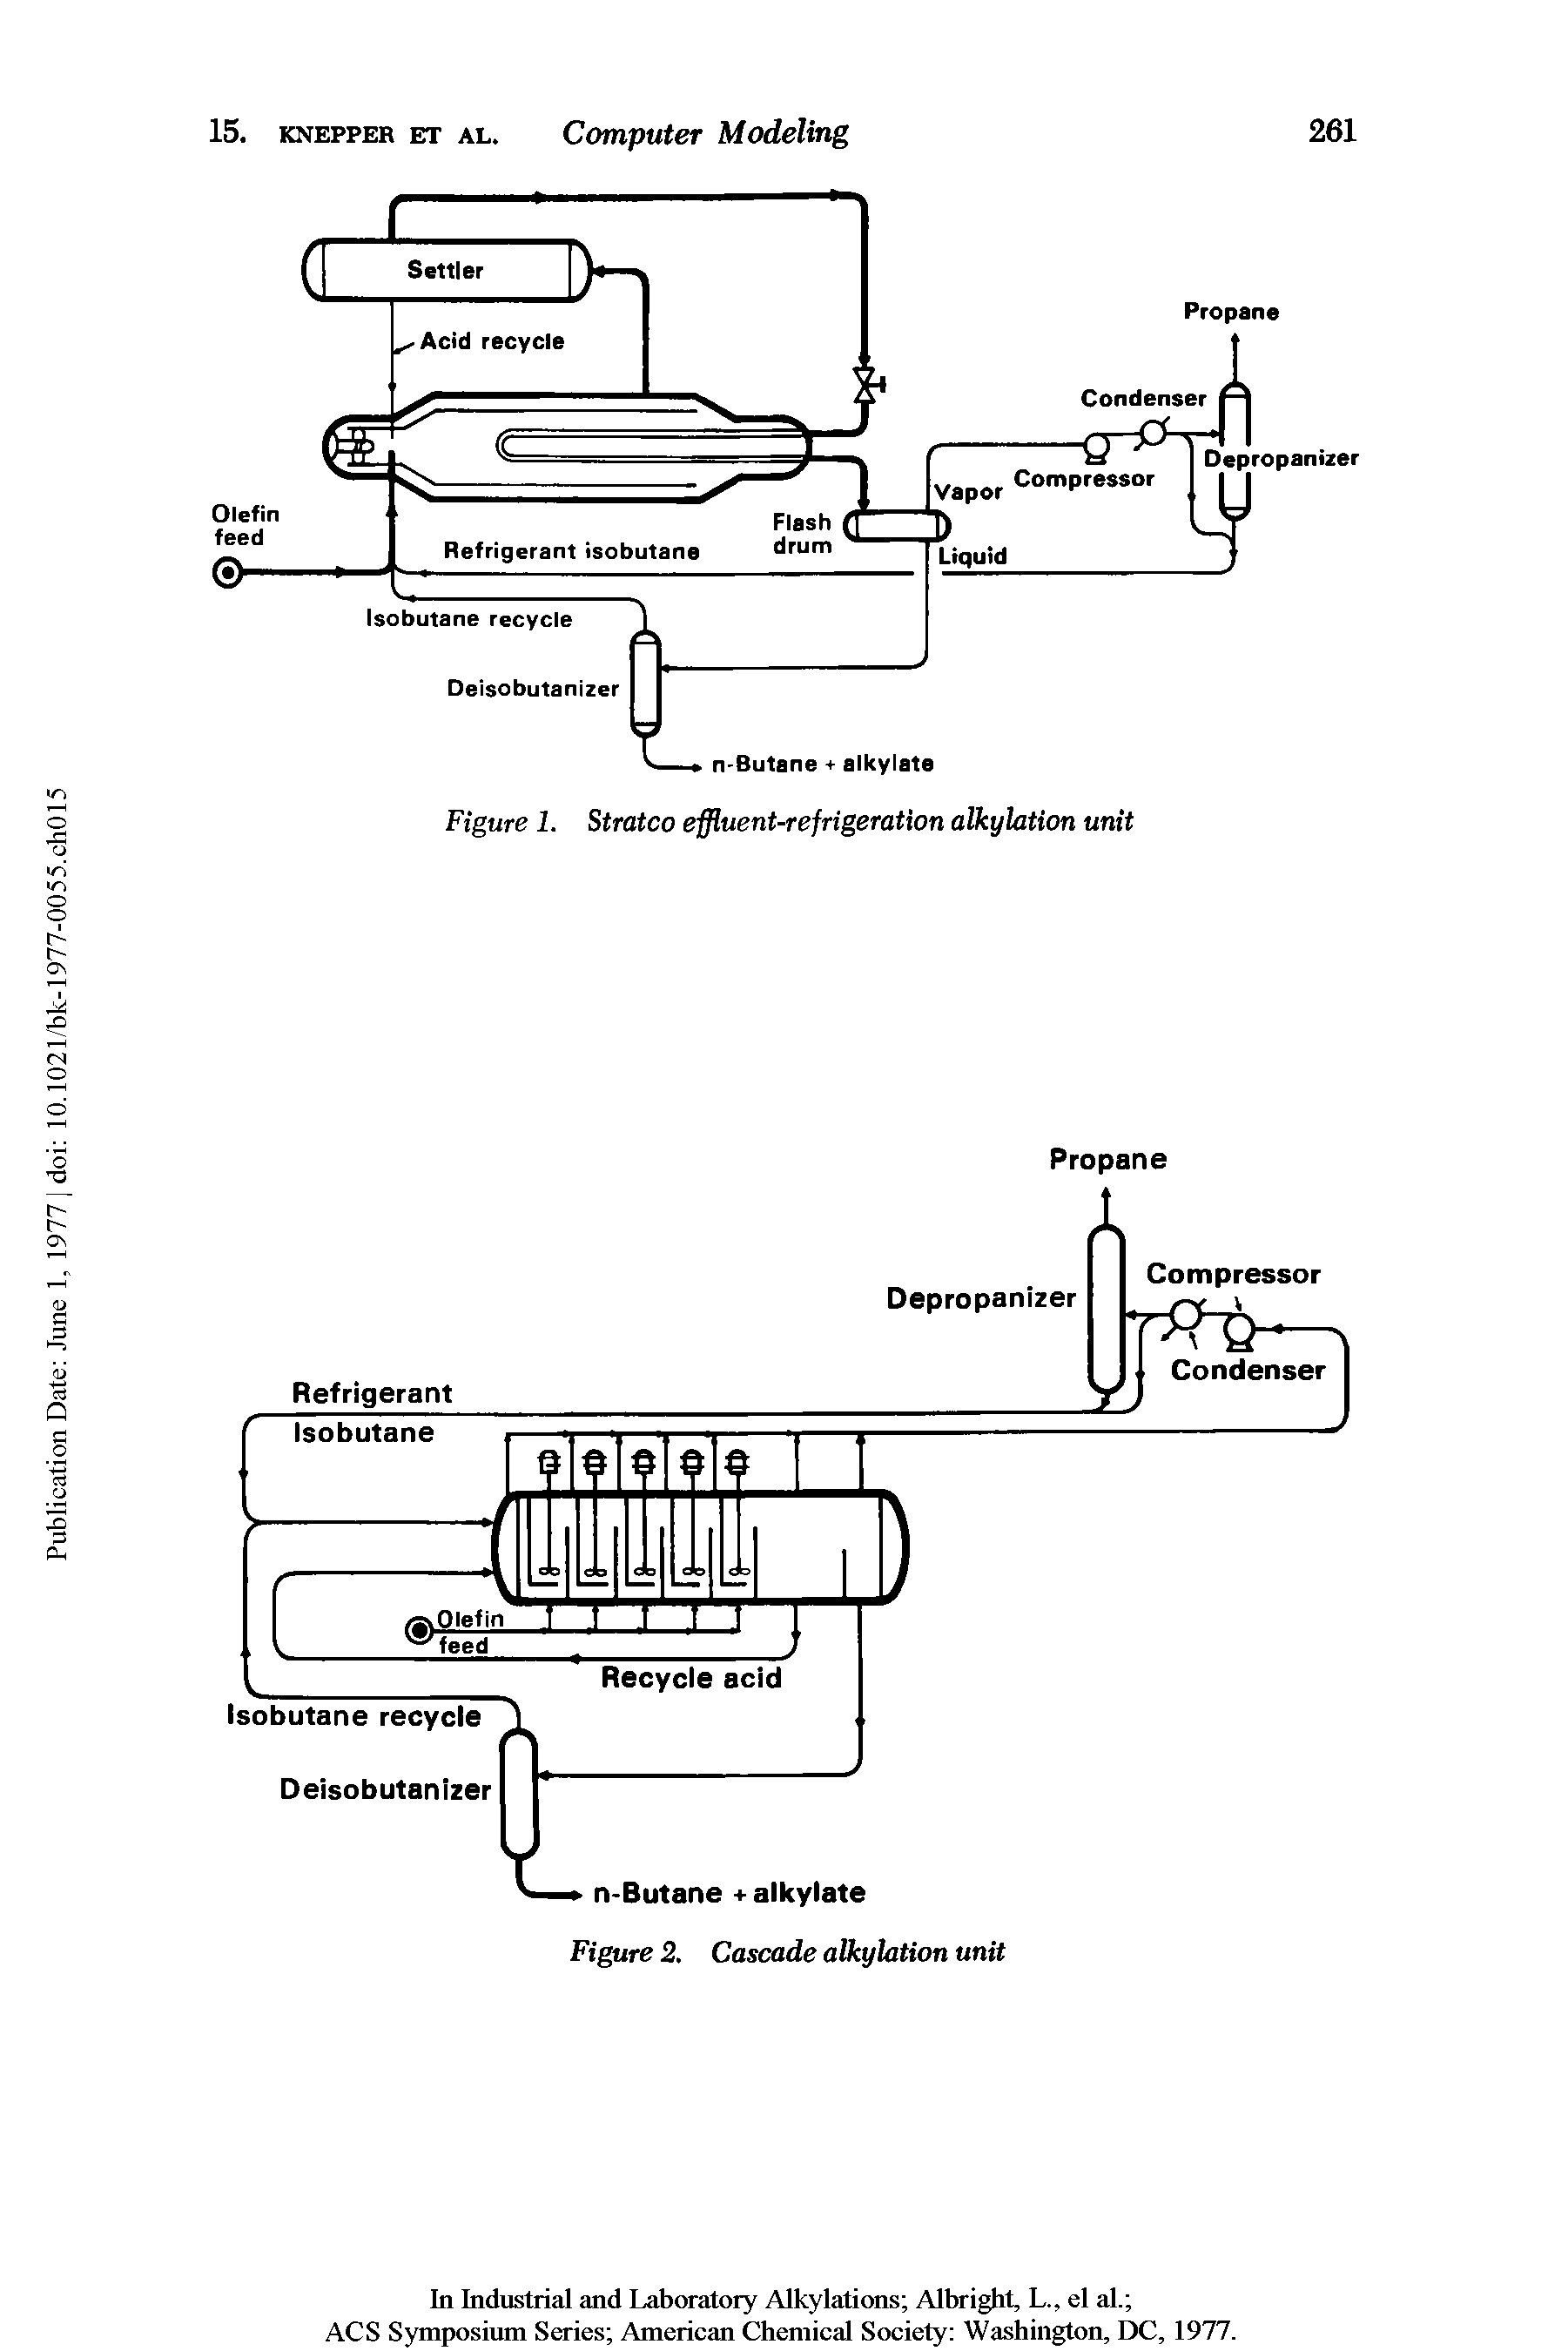 Figure 1. Stratco effluent-refrigeration alkylation unit...